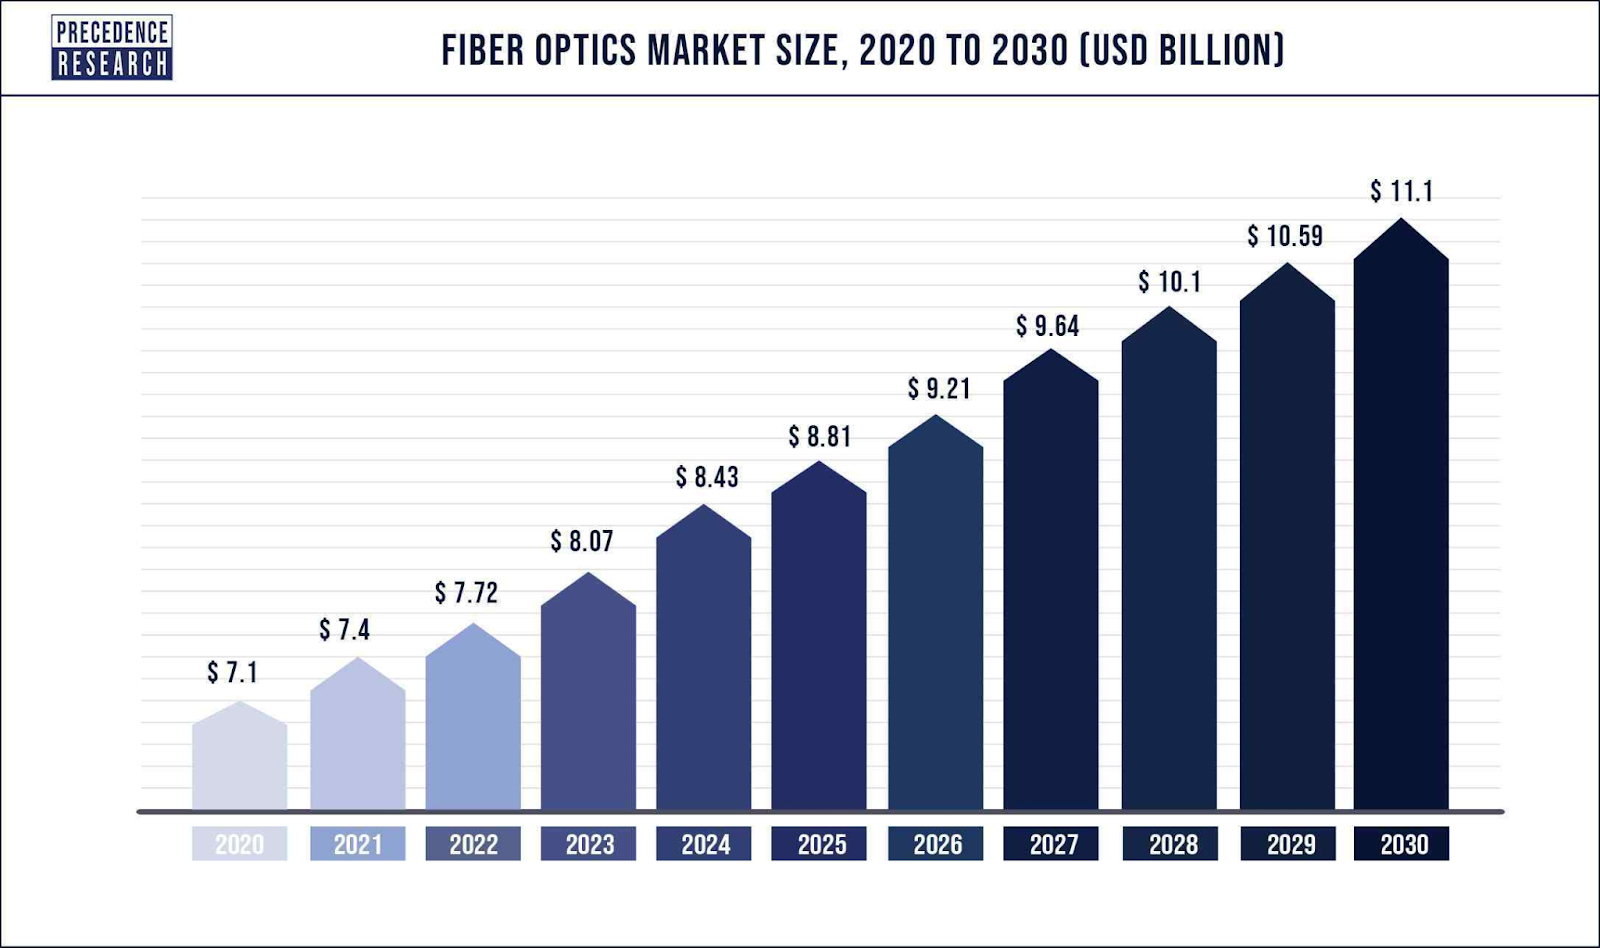 Fiber Optics Market Size, Precedence Research